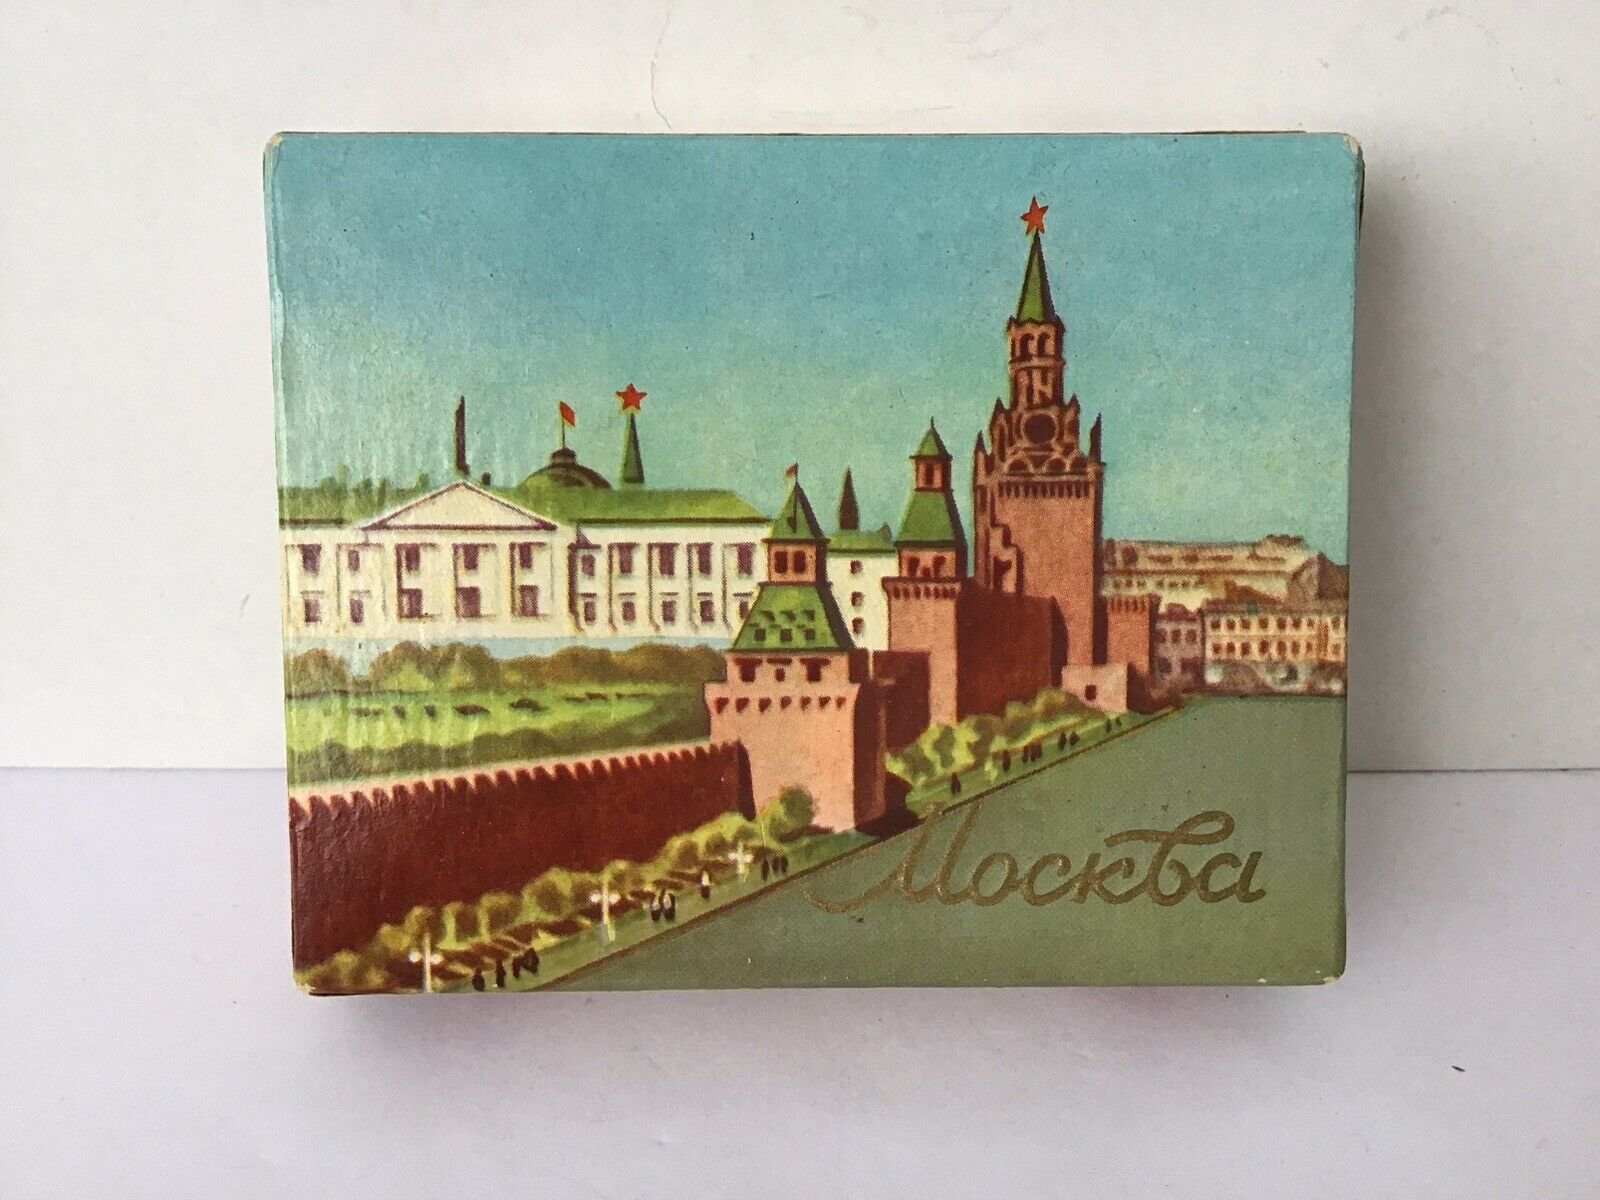 VTG Old Rare USSR Russian Federation Mockba Moscow Cigarette Box Empty